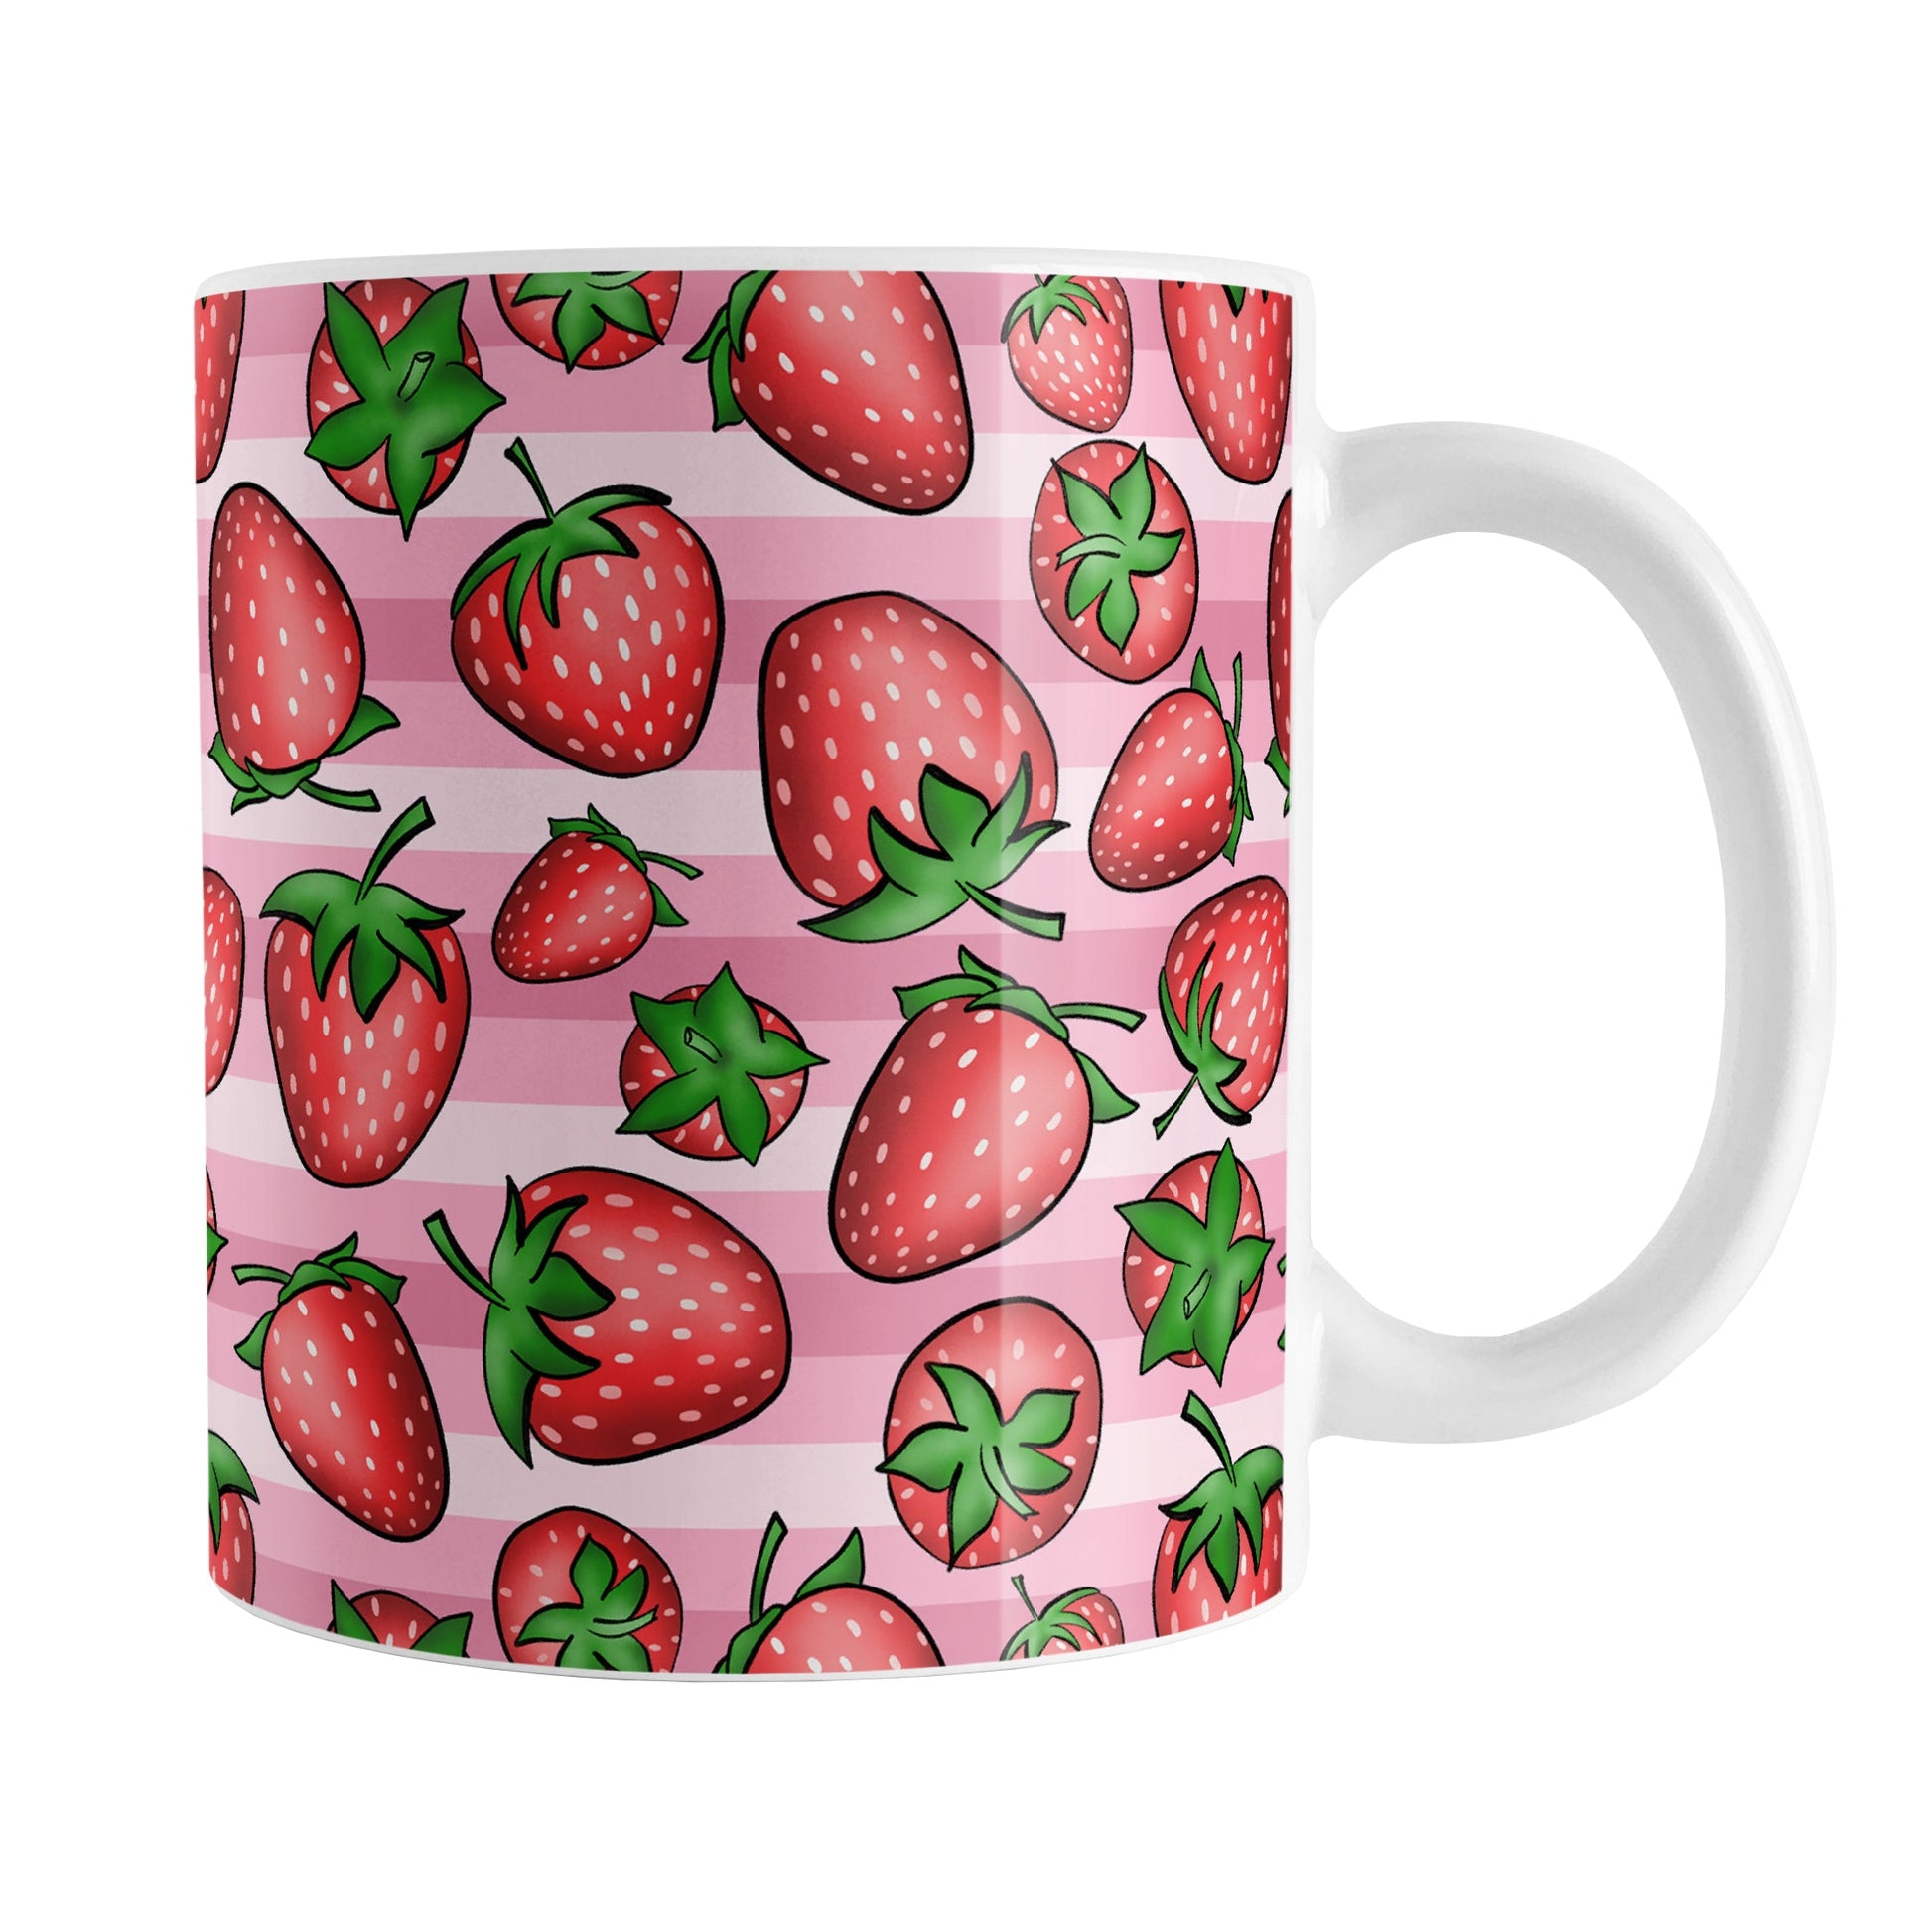 Strawberries on Pink Stripes Mug (11oz) at Amy's Coffee Mugs